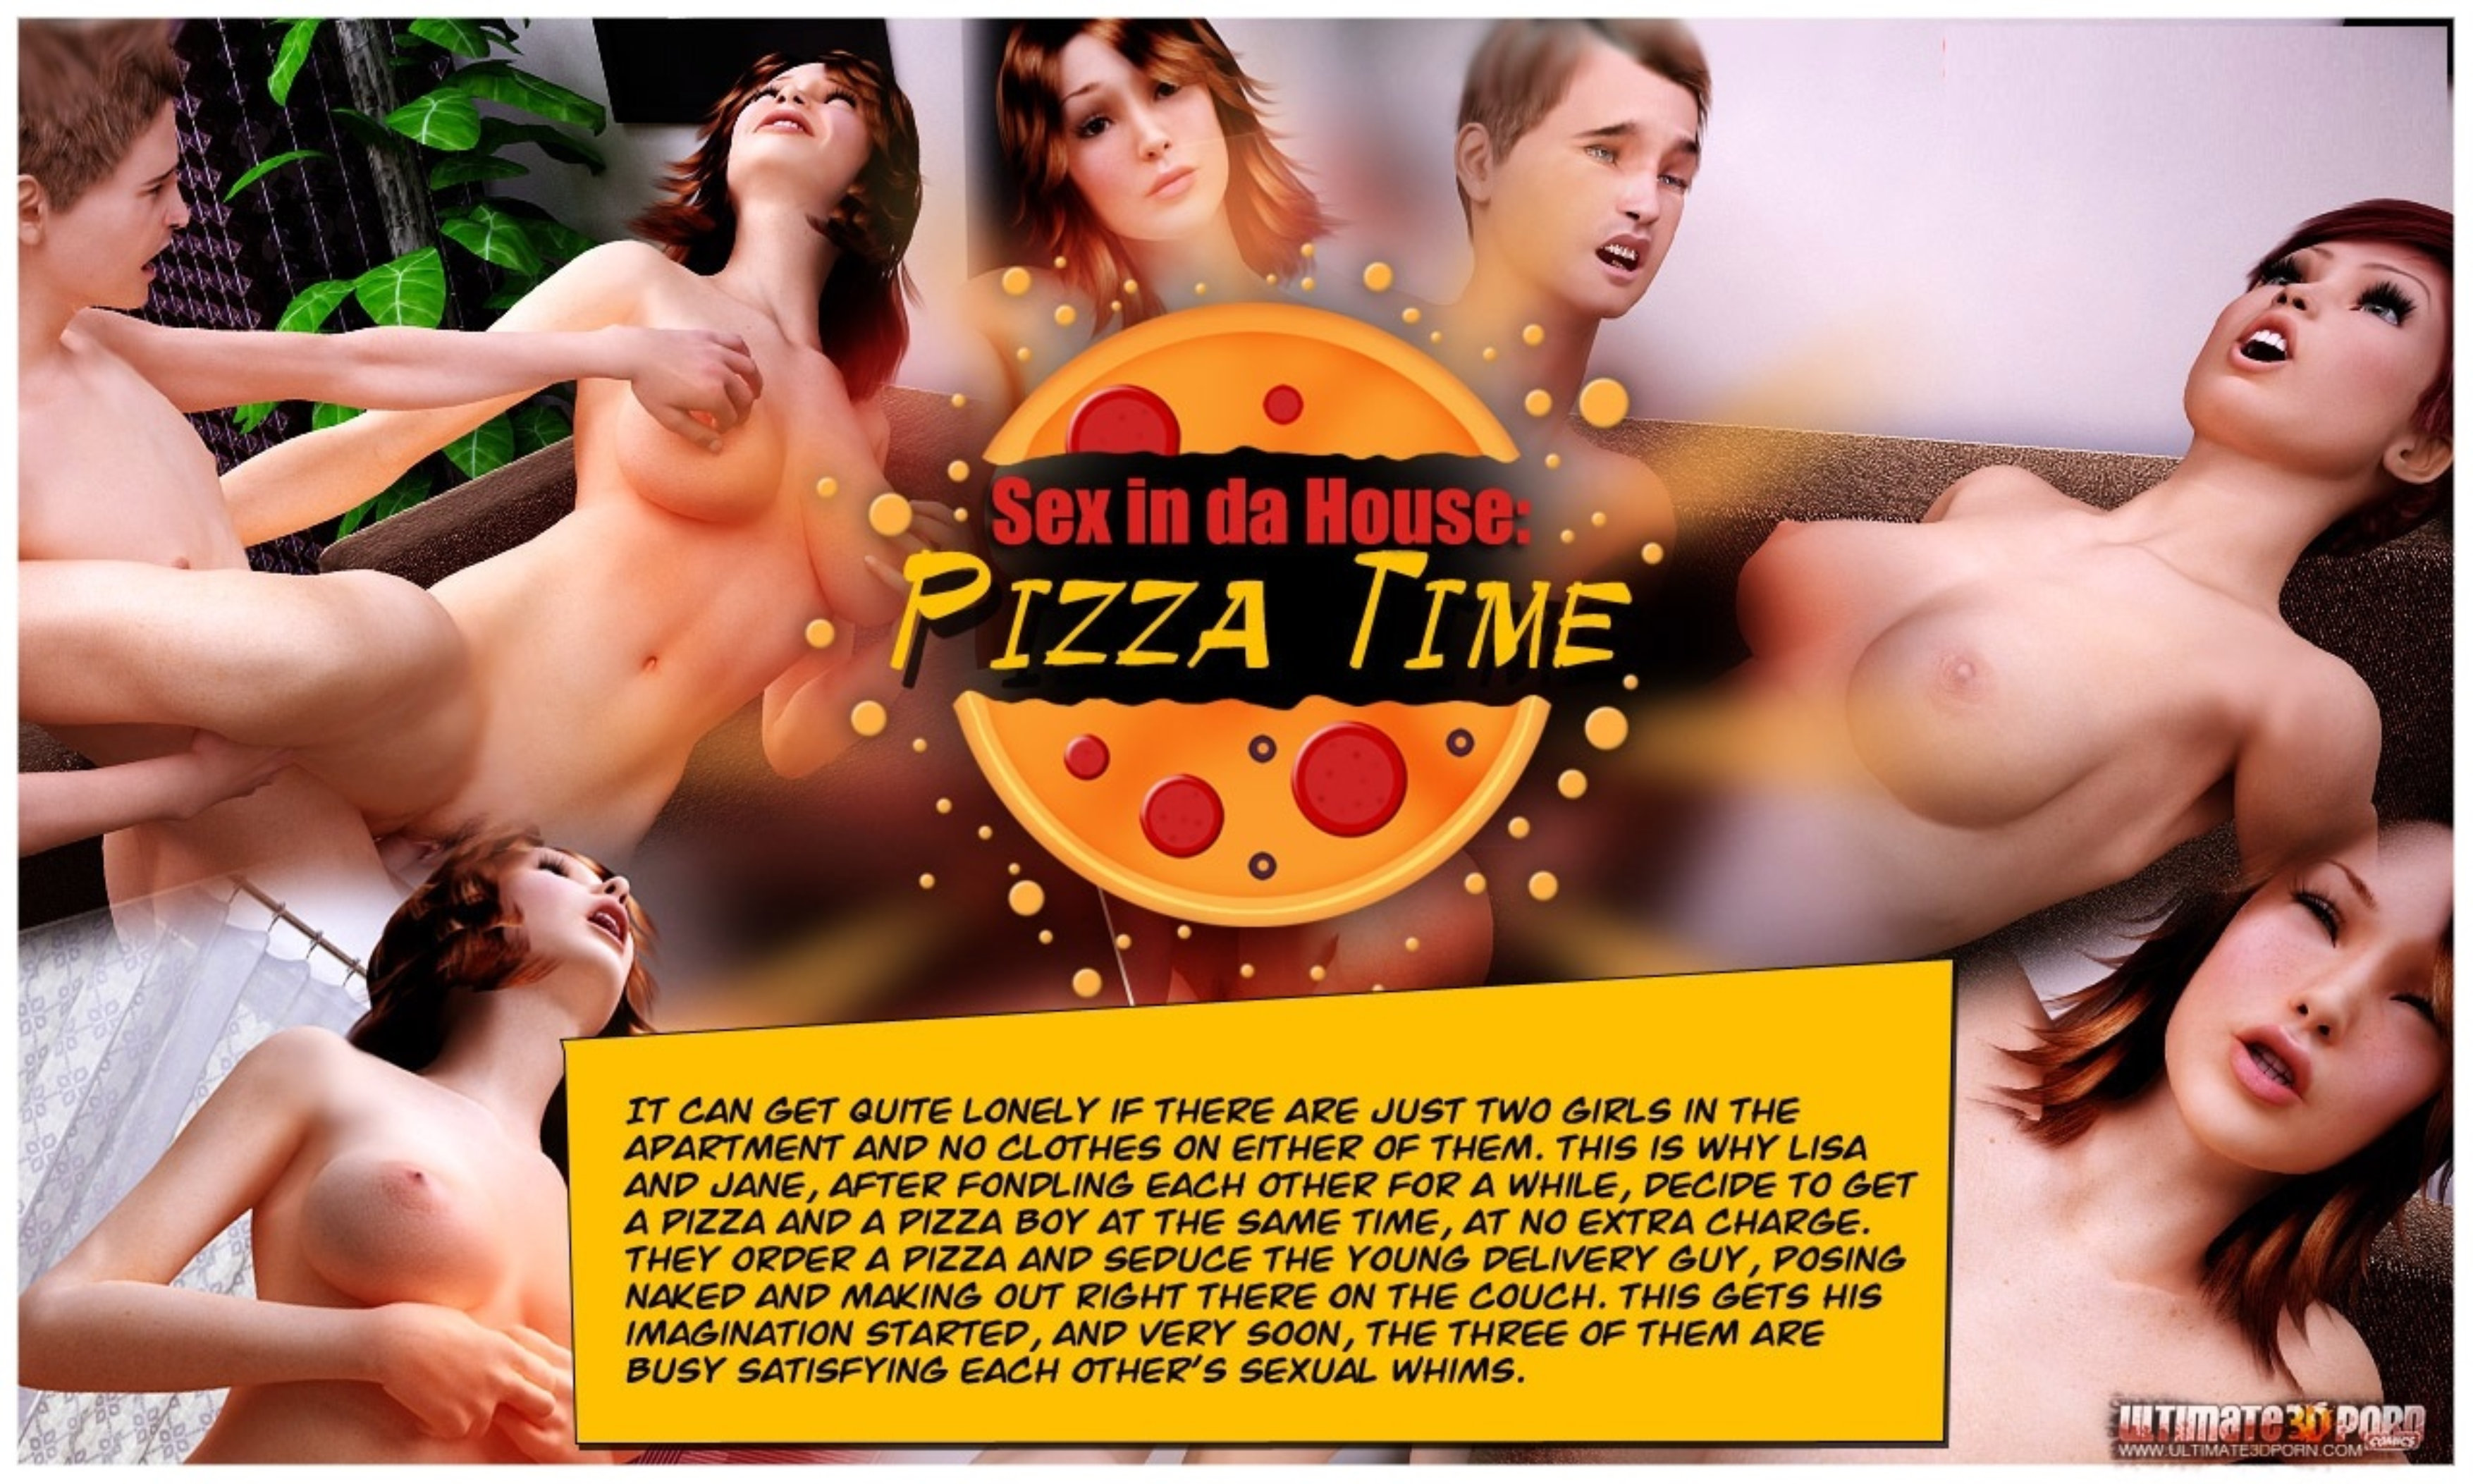 Ultimate3dporn - Sex in da House - Pizza Time